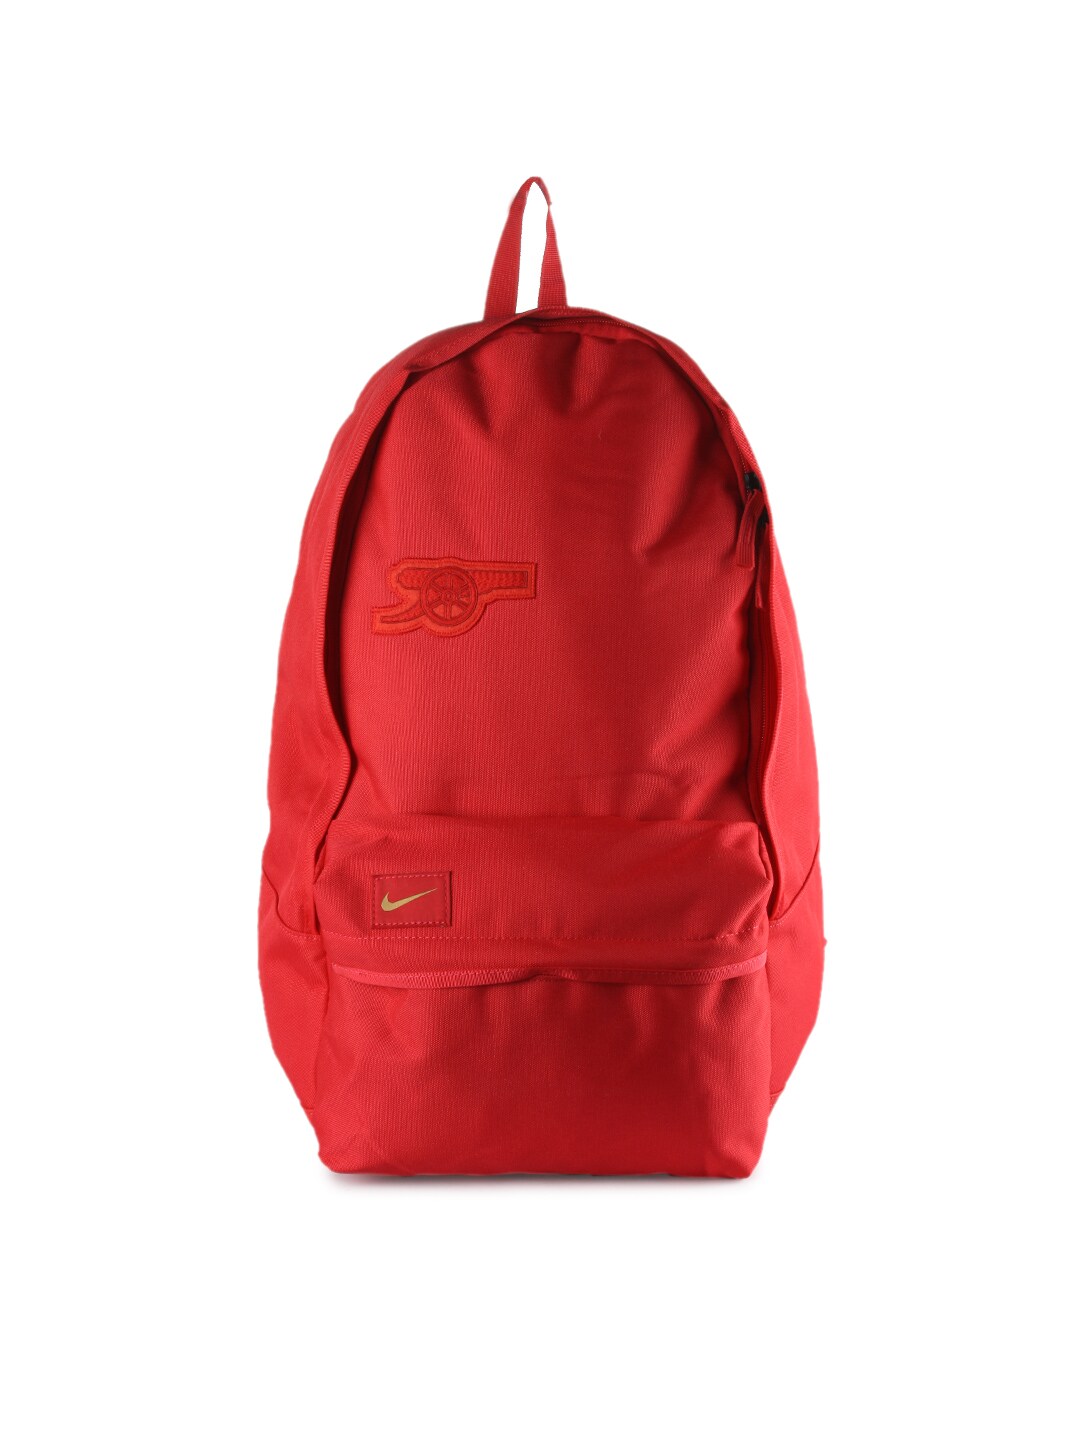 Nike Unisex Red Backpack